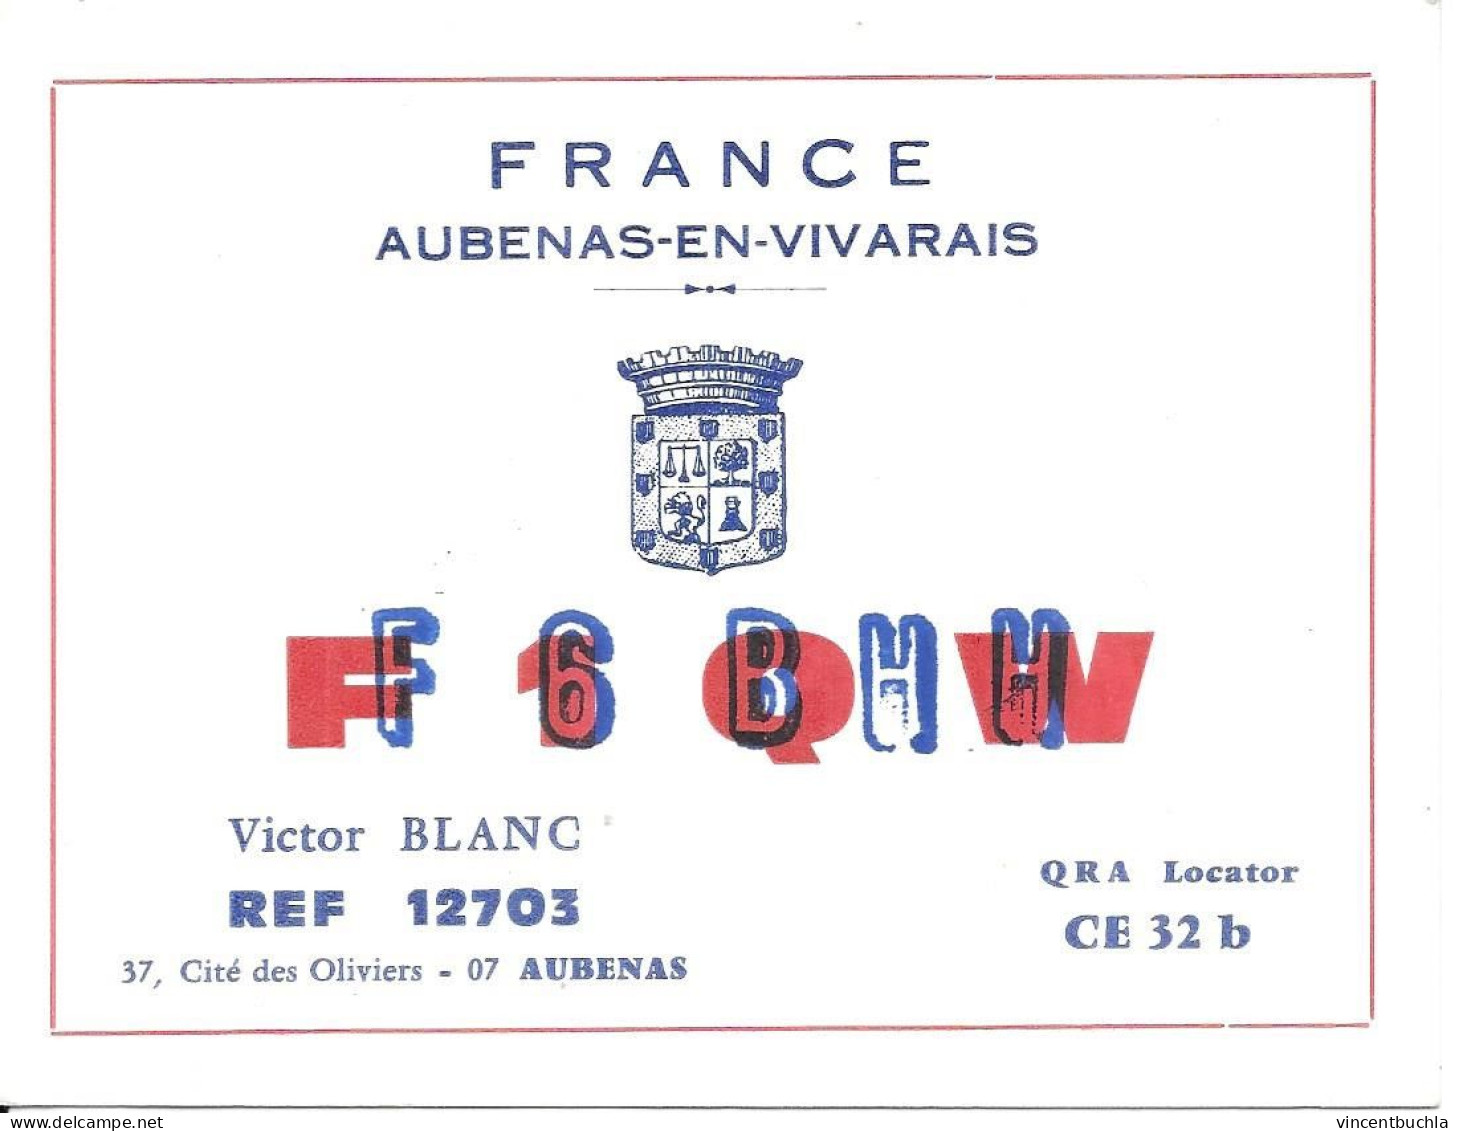 Carte QSL F6 BHH Aubenas En Vivarais 22 Juillet 1973 Victor Blanc France - Radio Amateur